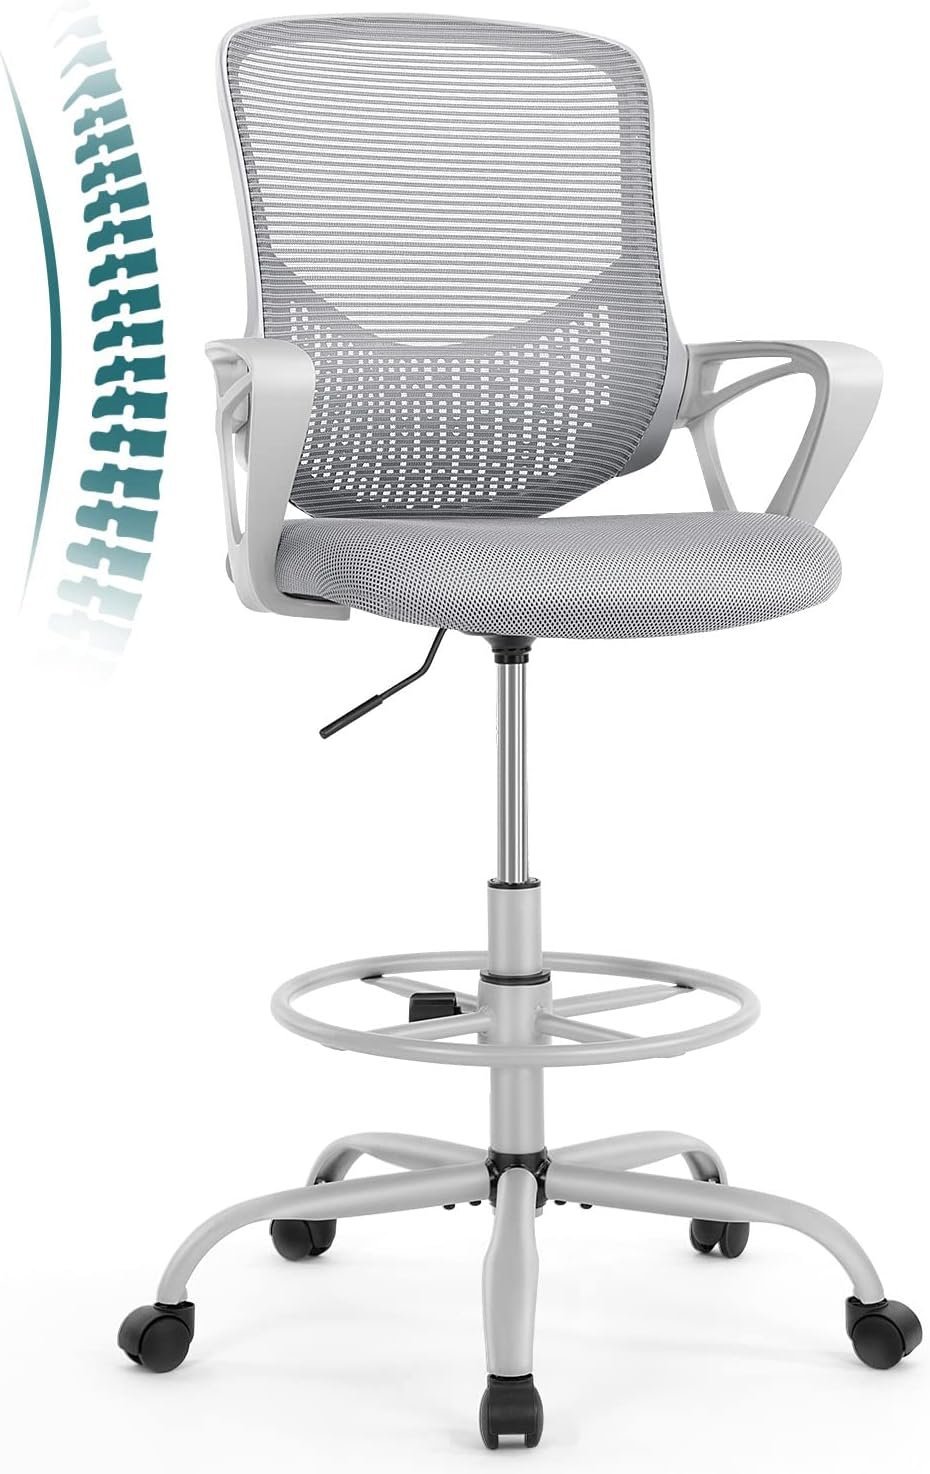 SMUG Adjustable Counter Height Office Chair, Black, Mesh